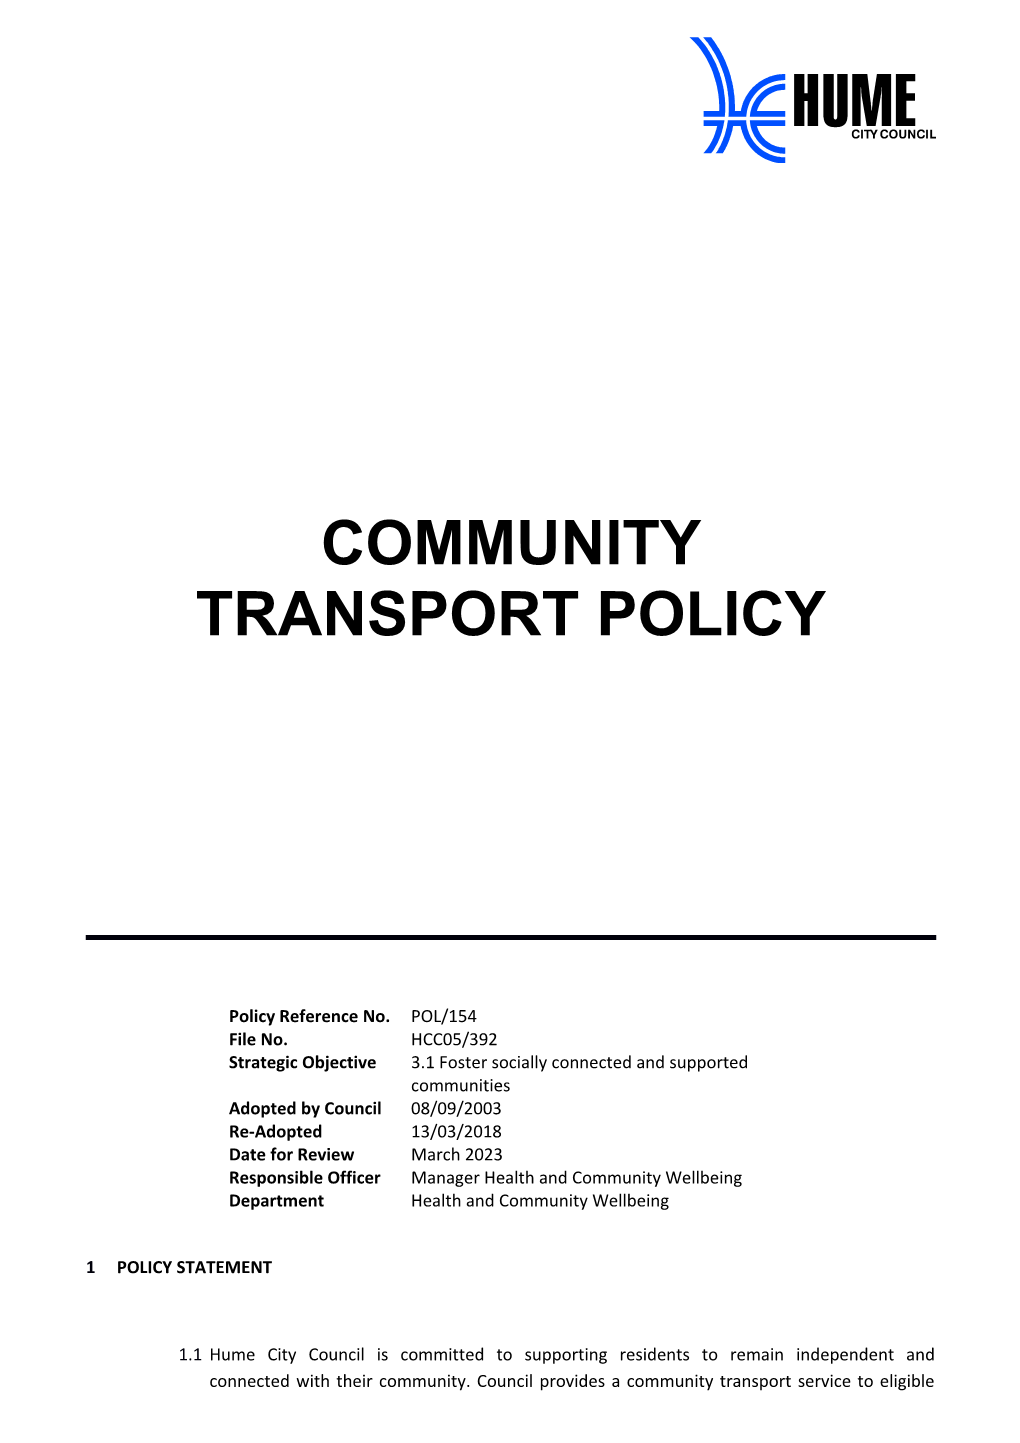 Community Transport Policy